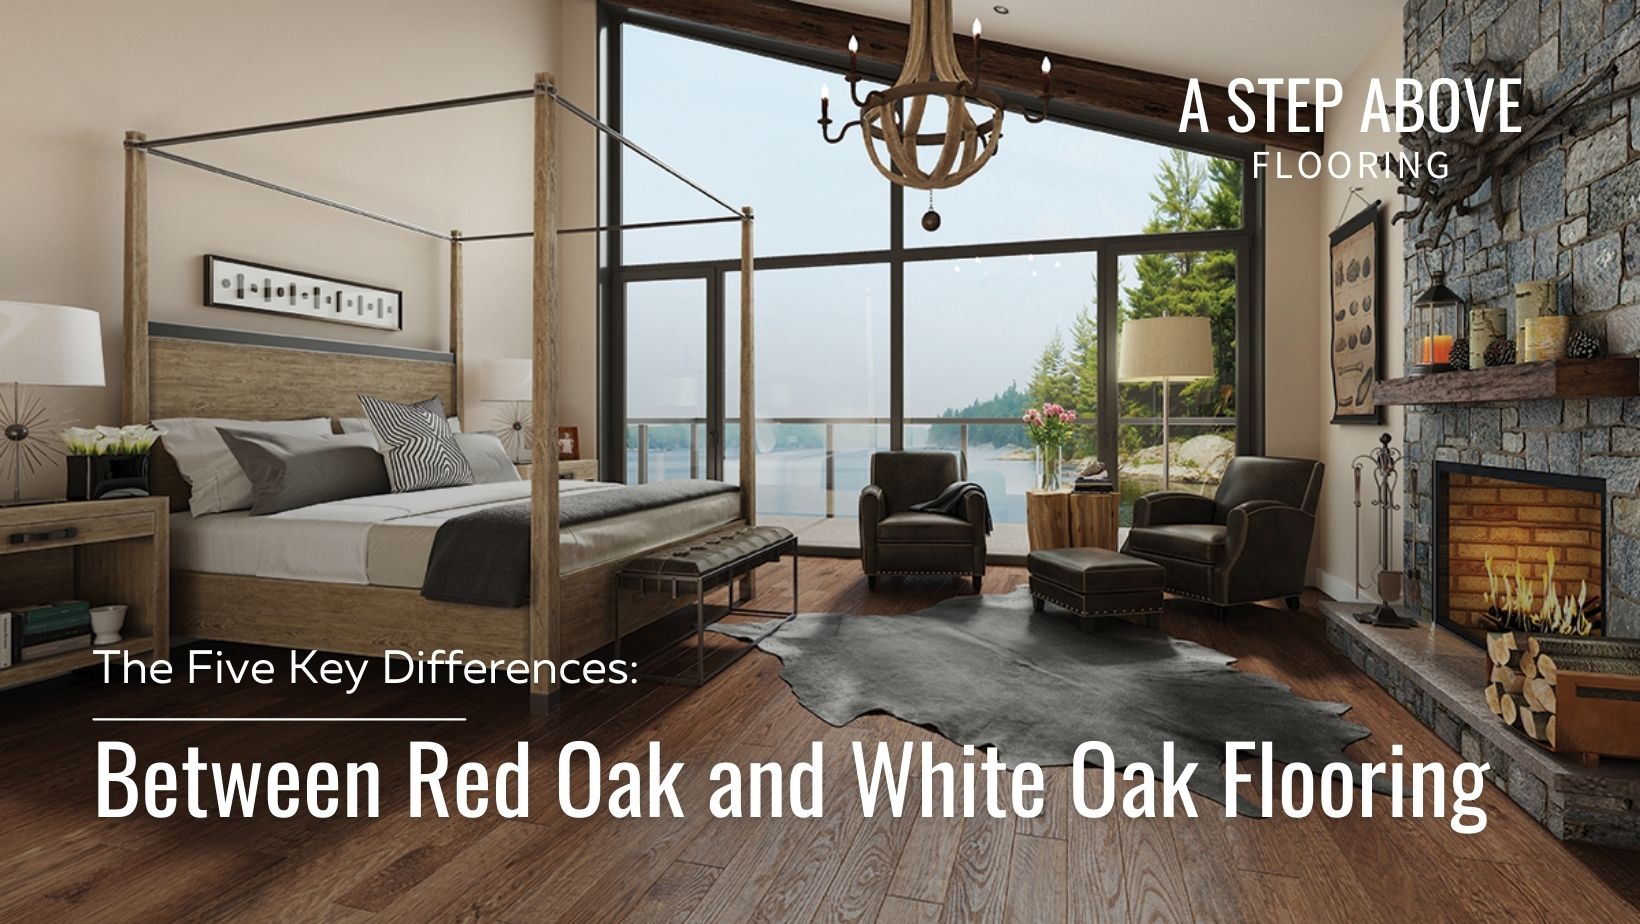 Red oak and white oak flooring